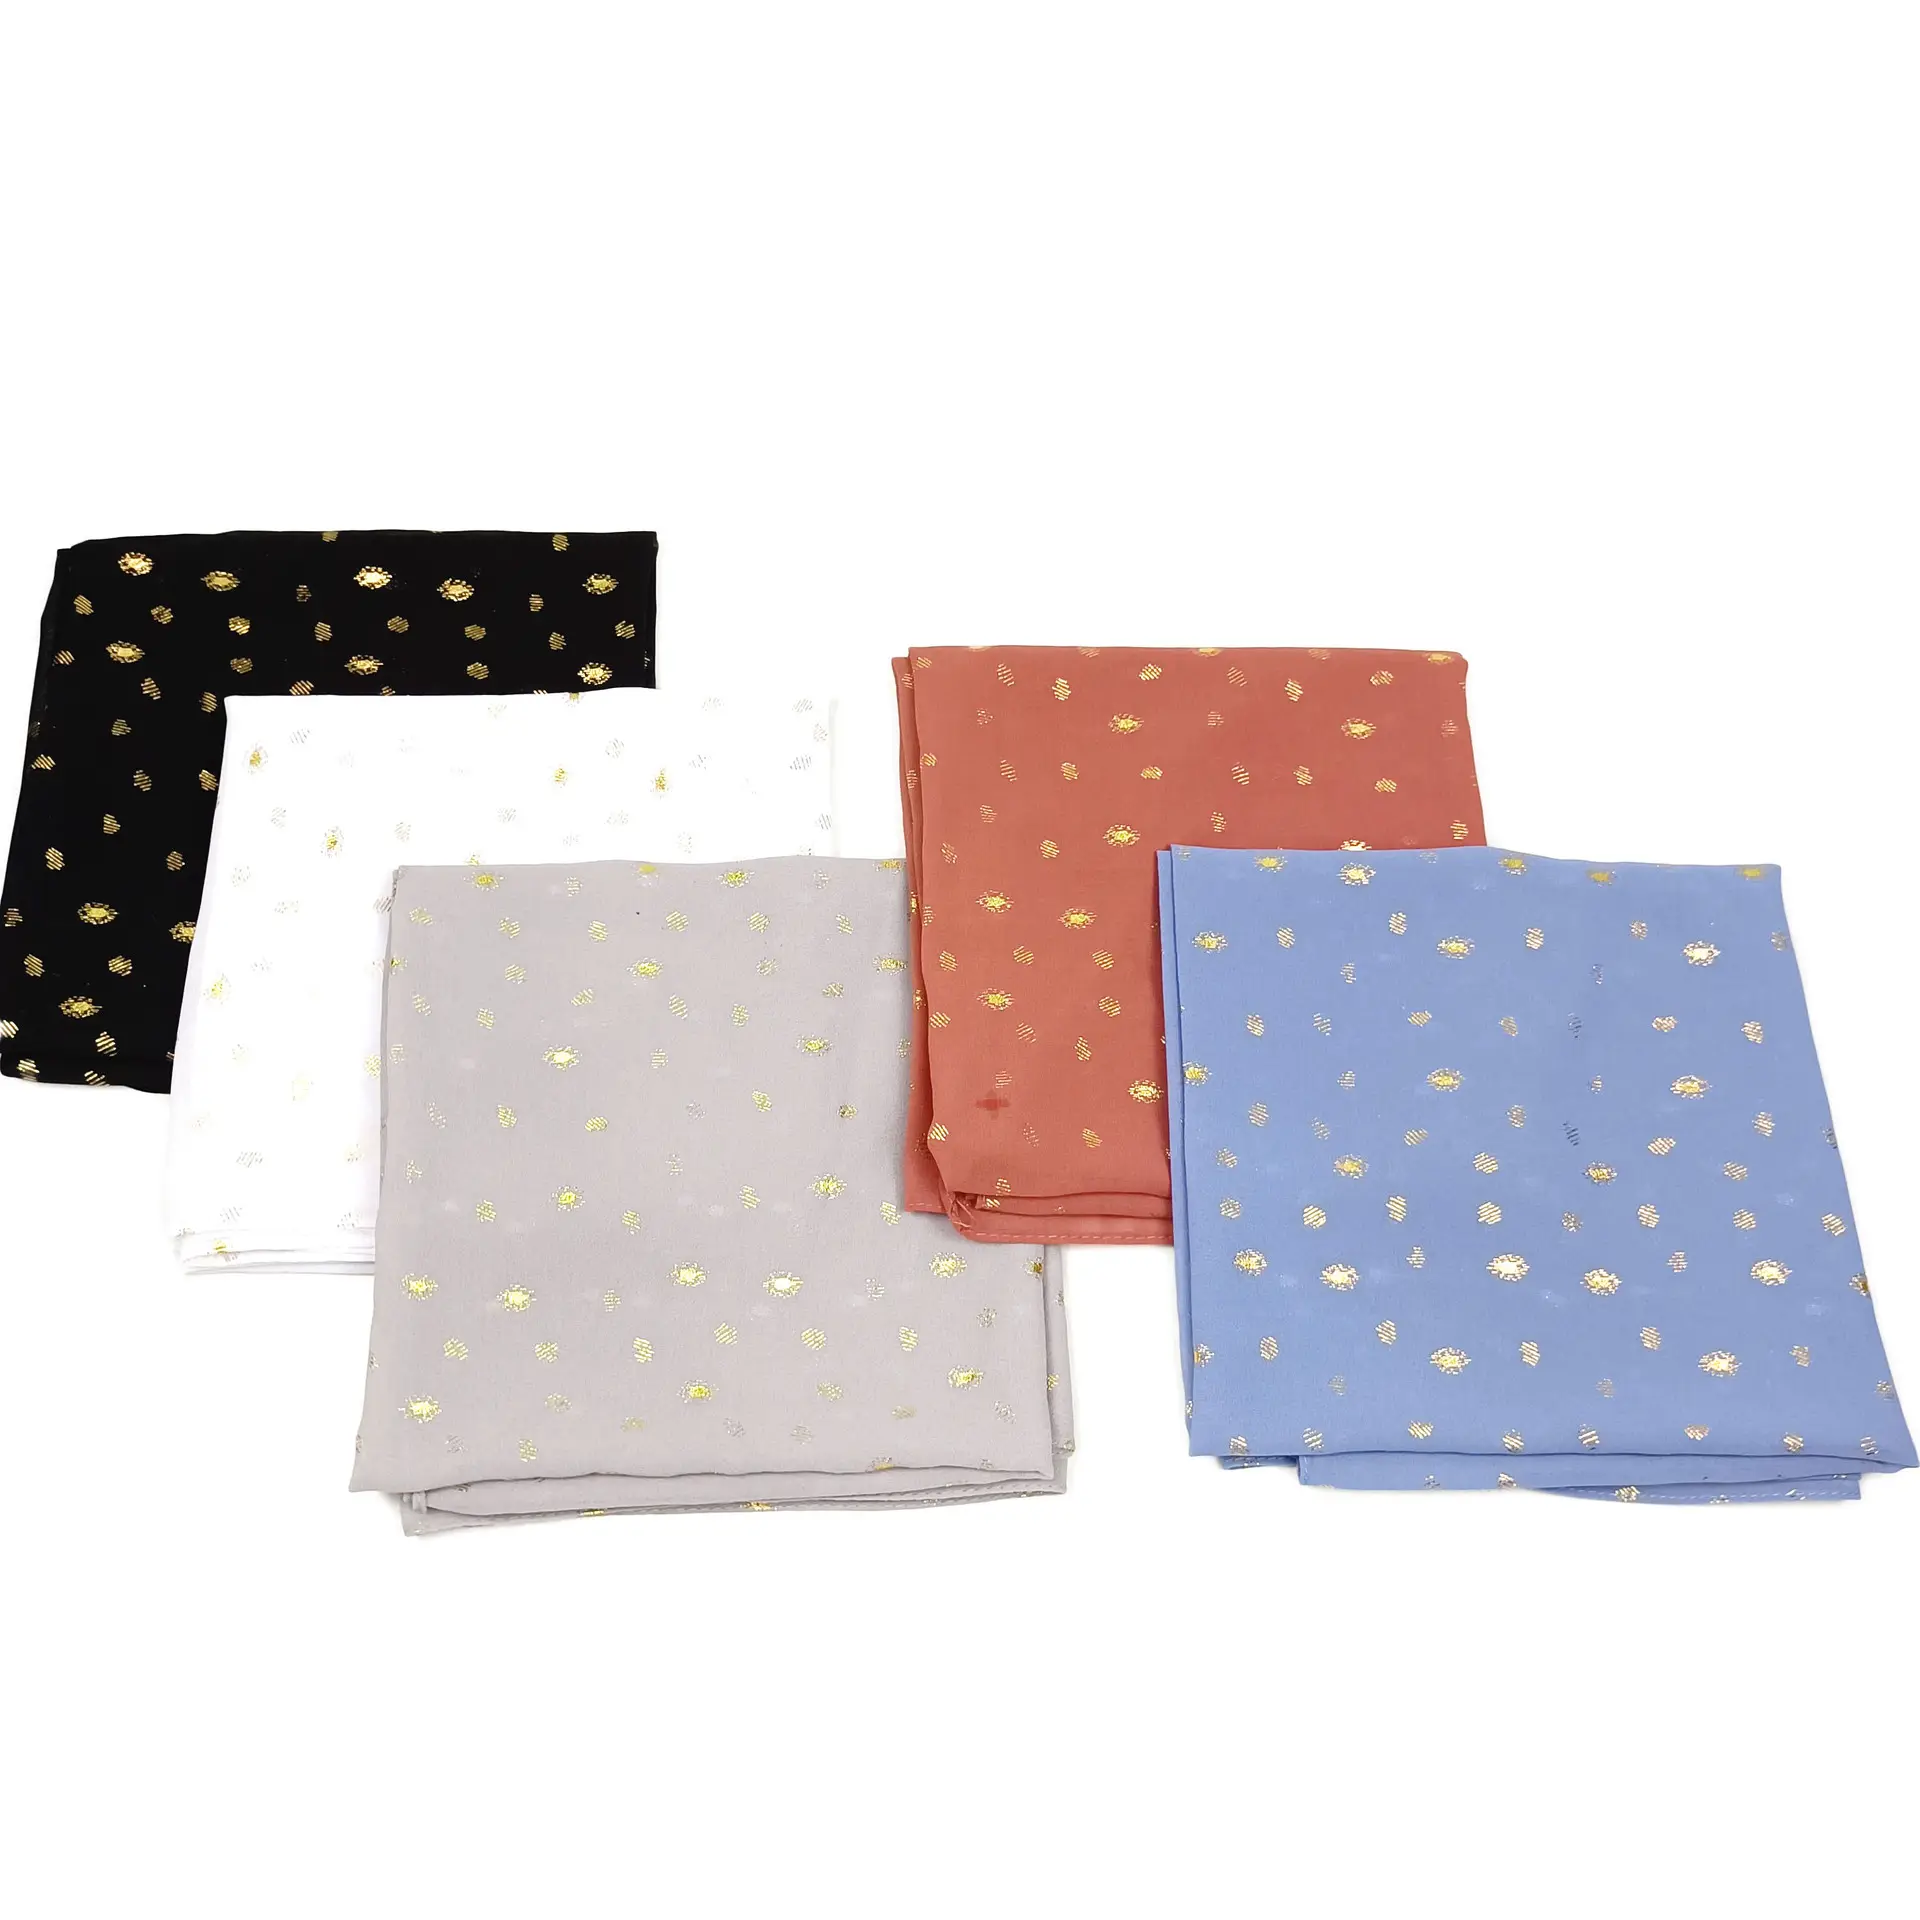 New round gold small square towel pearl chiffon square towel 90cm monochrome scarf for women